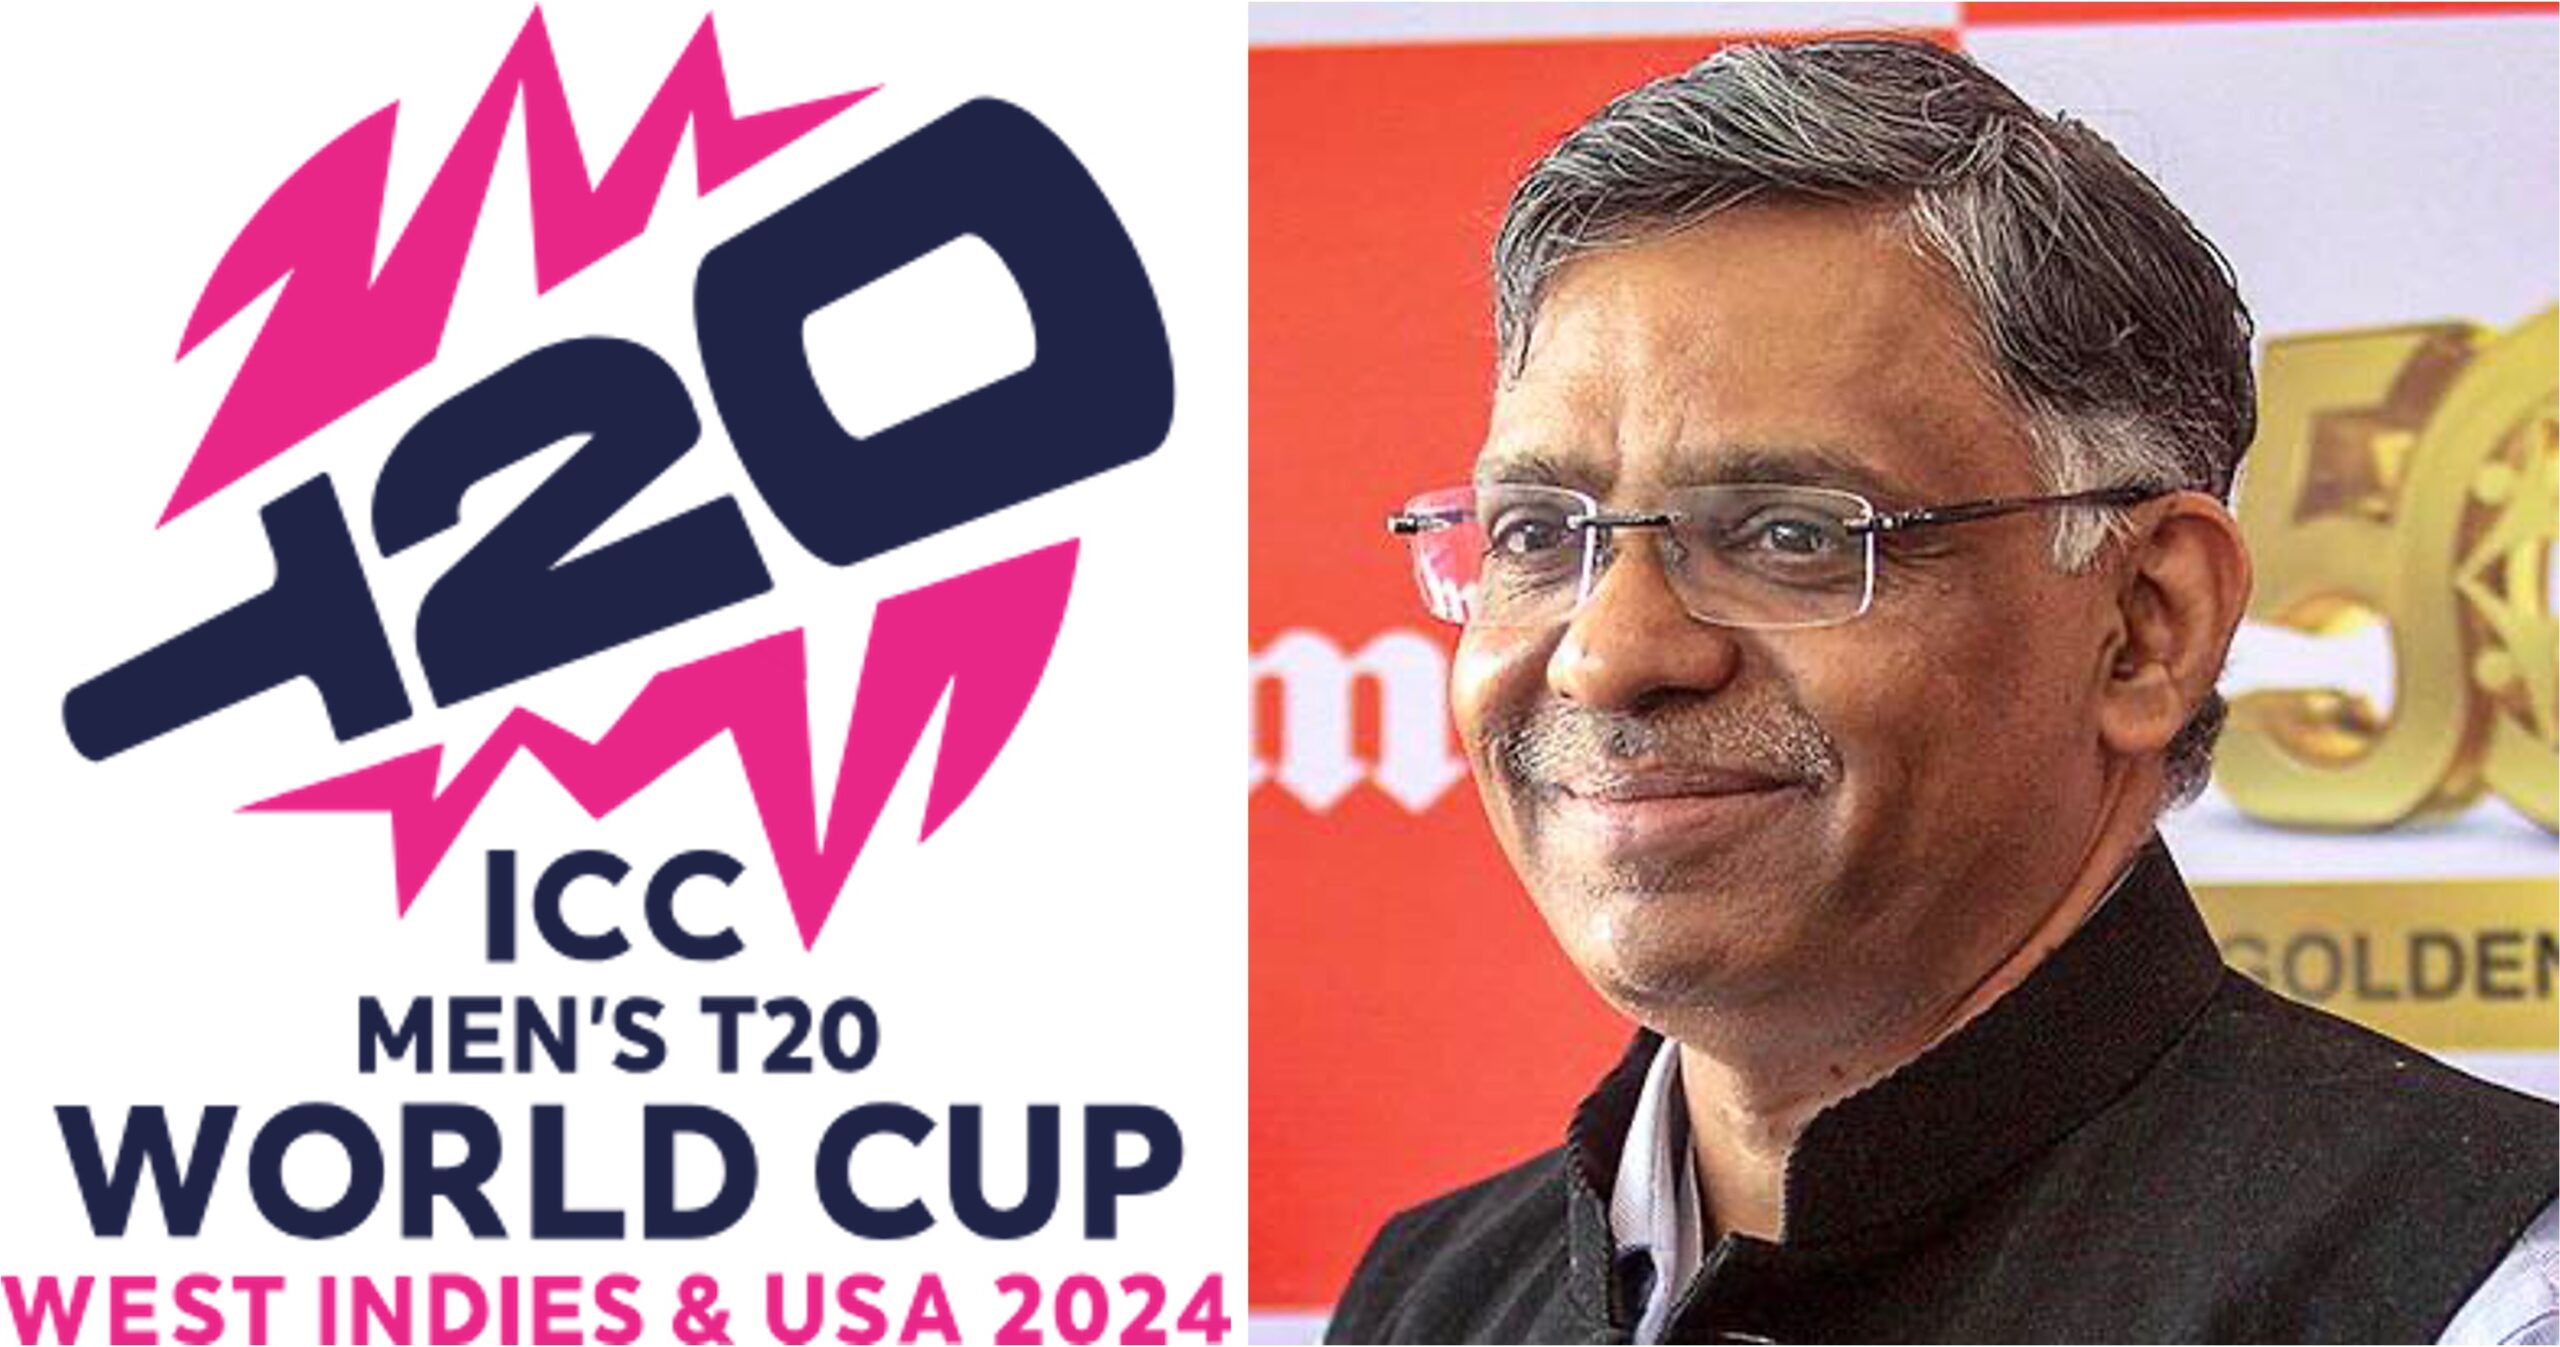 icc world cup 2024 sponsorship amul dairynews7x7